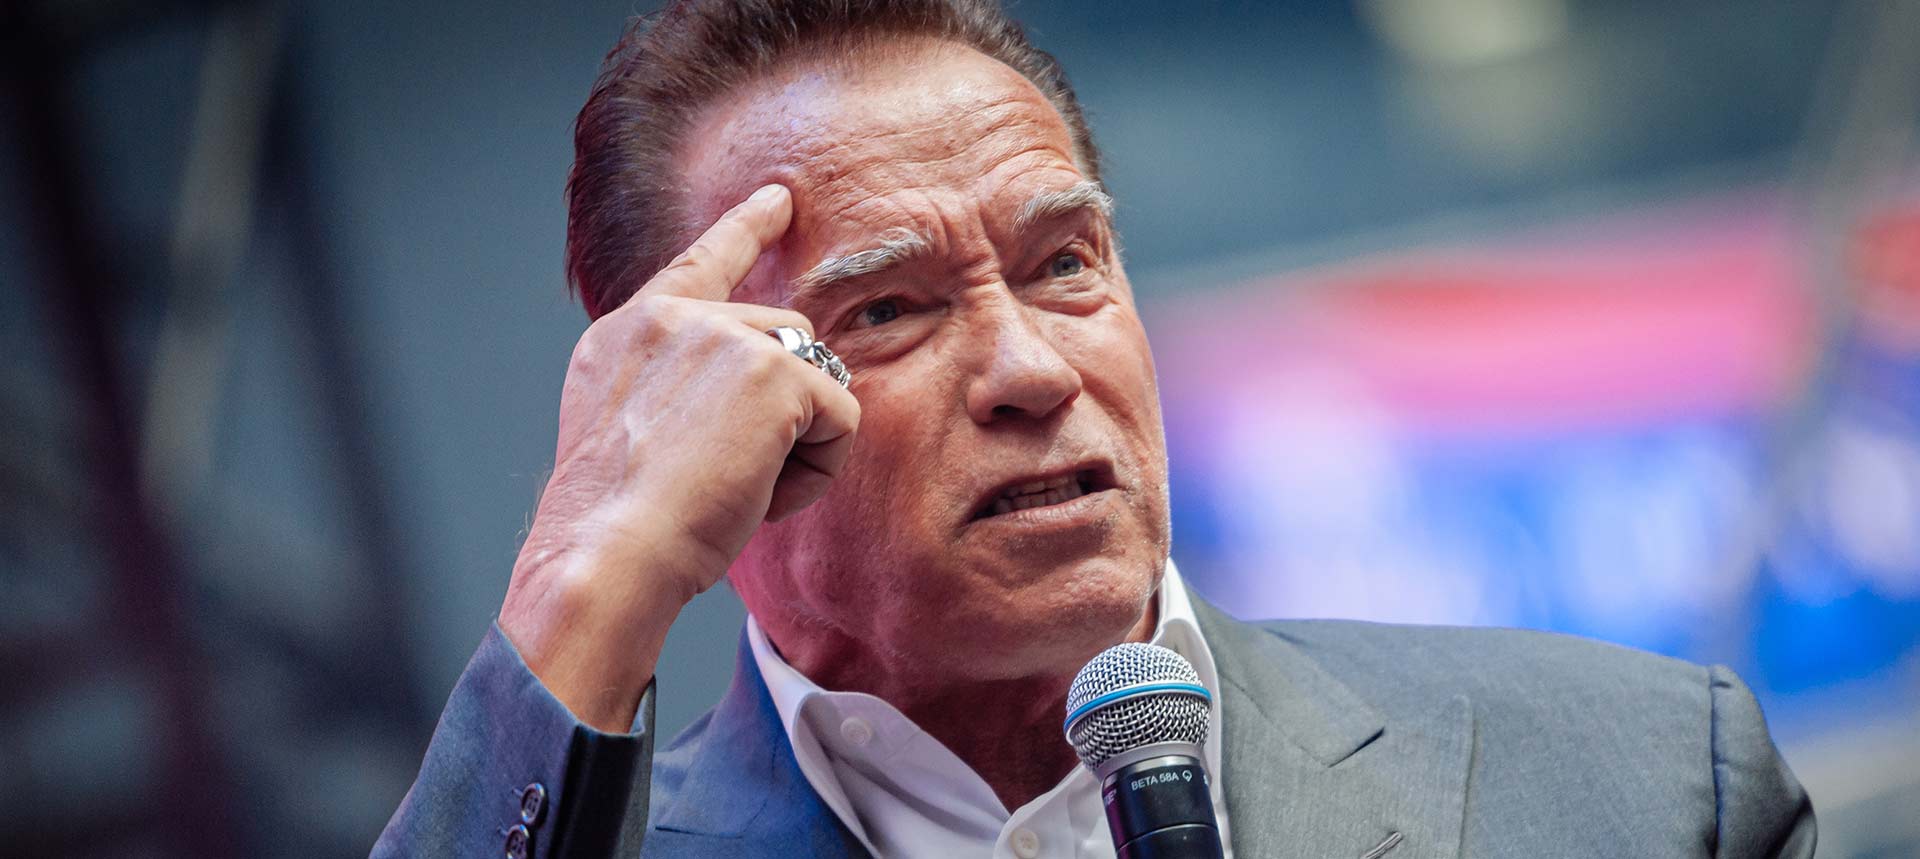 Ellis Cashmore, Arnold Schwarzenegger stay at home video, Arnold Schwarzenegger self-isolation, celebrity news, celebrity self-isolation, covid-19 advice from celebrities, celebrity coronavirus advice, self-isolation tips from celebrities, entertainment news, celebrity social media